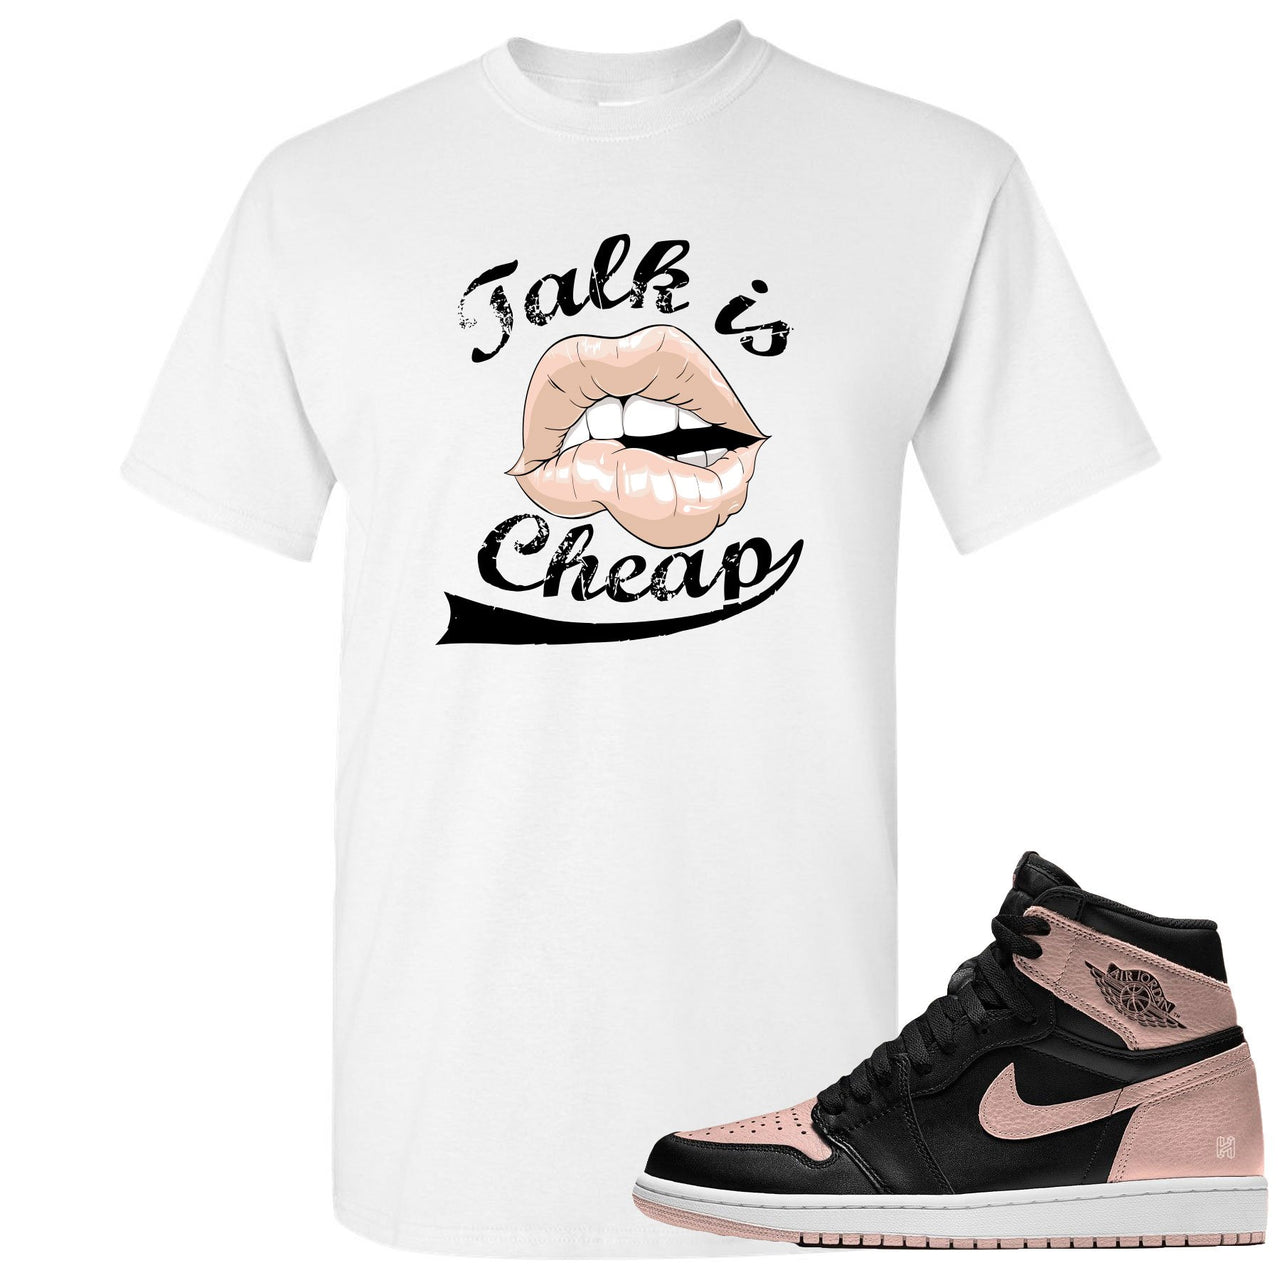 White and crimson t-shirt to match Crimson Tint Jordan 1 shoes